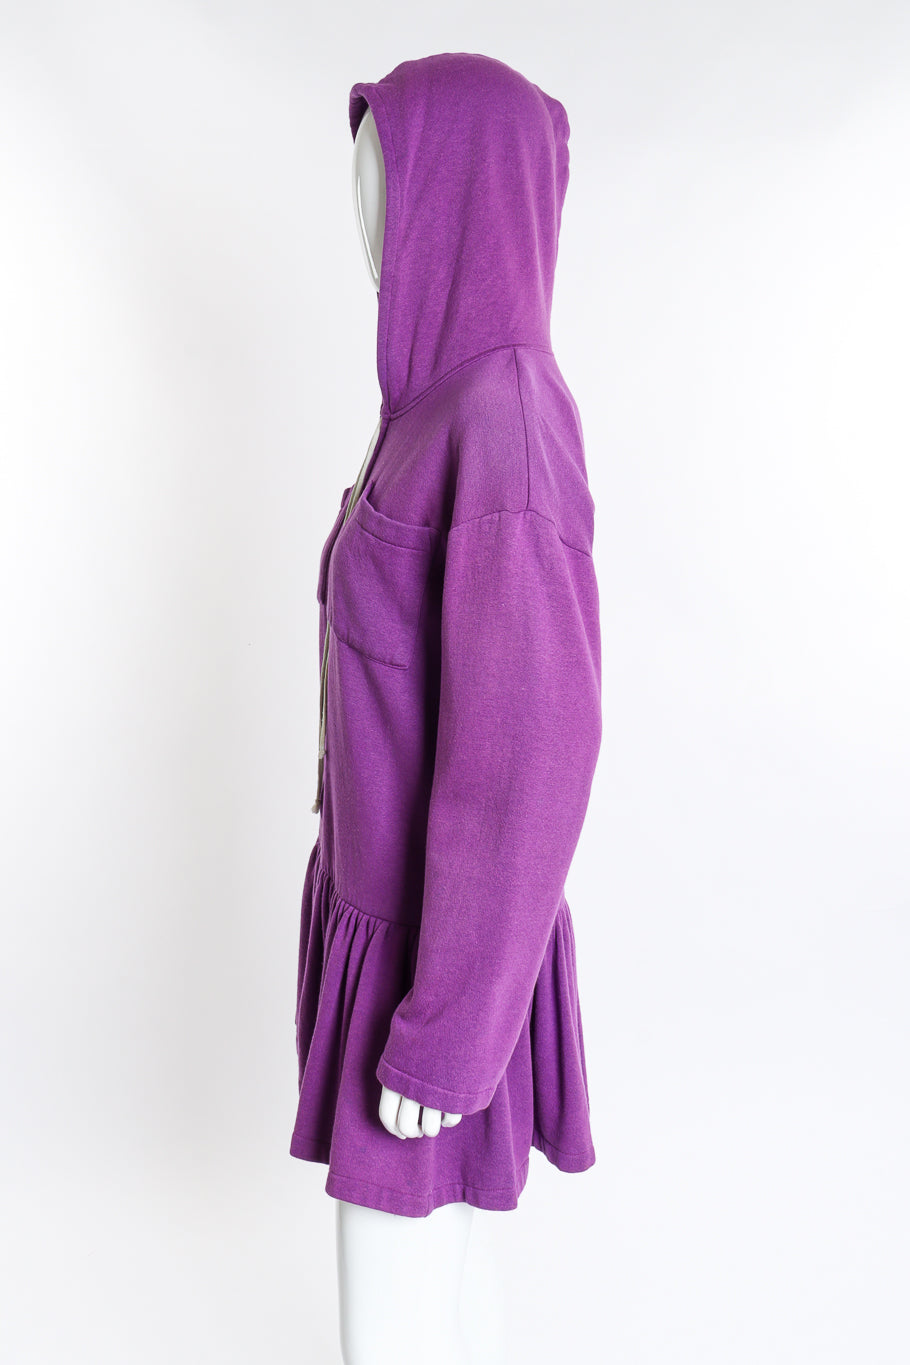 Vintage Norma Kamali Hooded Terry Dress side on mannequin hood up @recess la